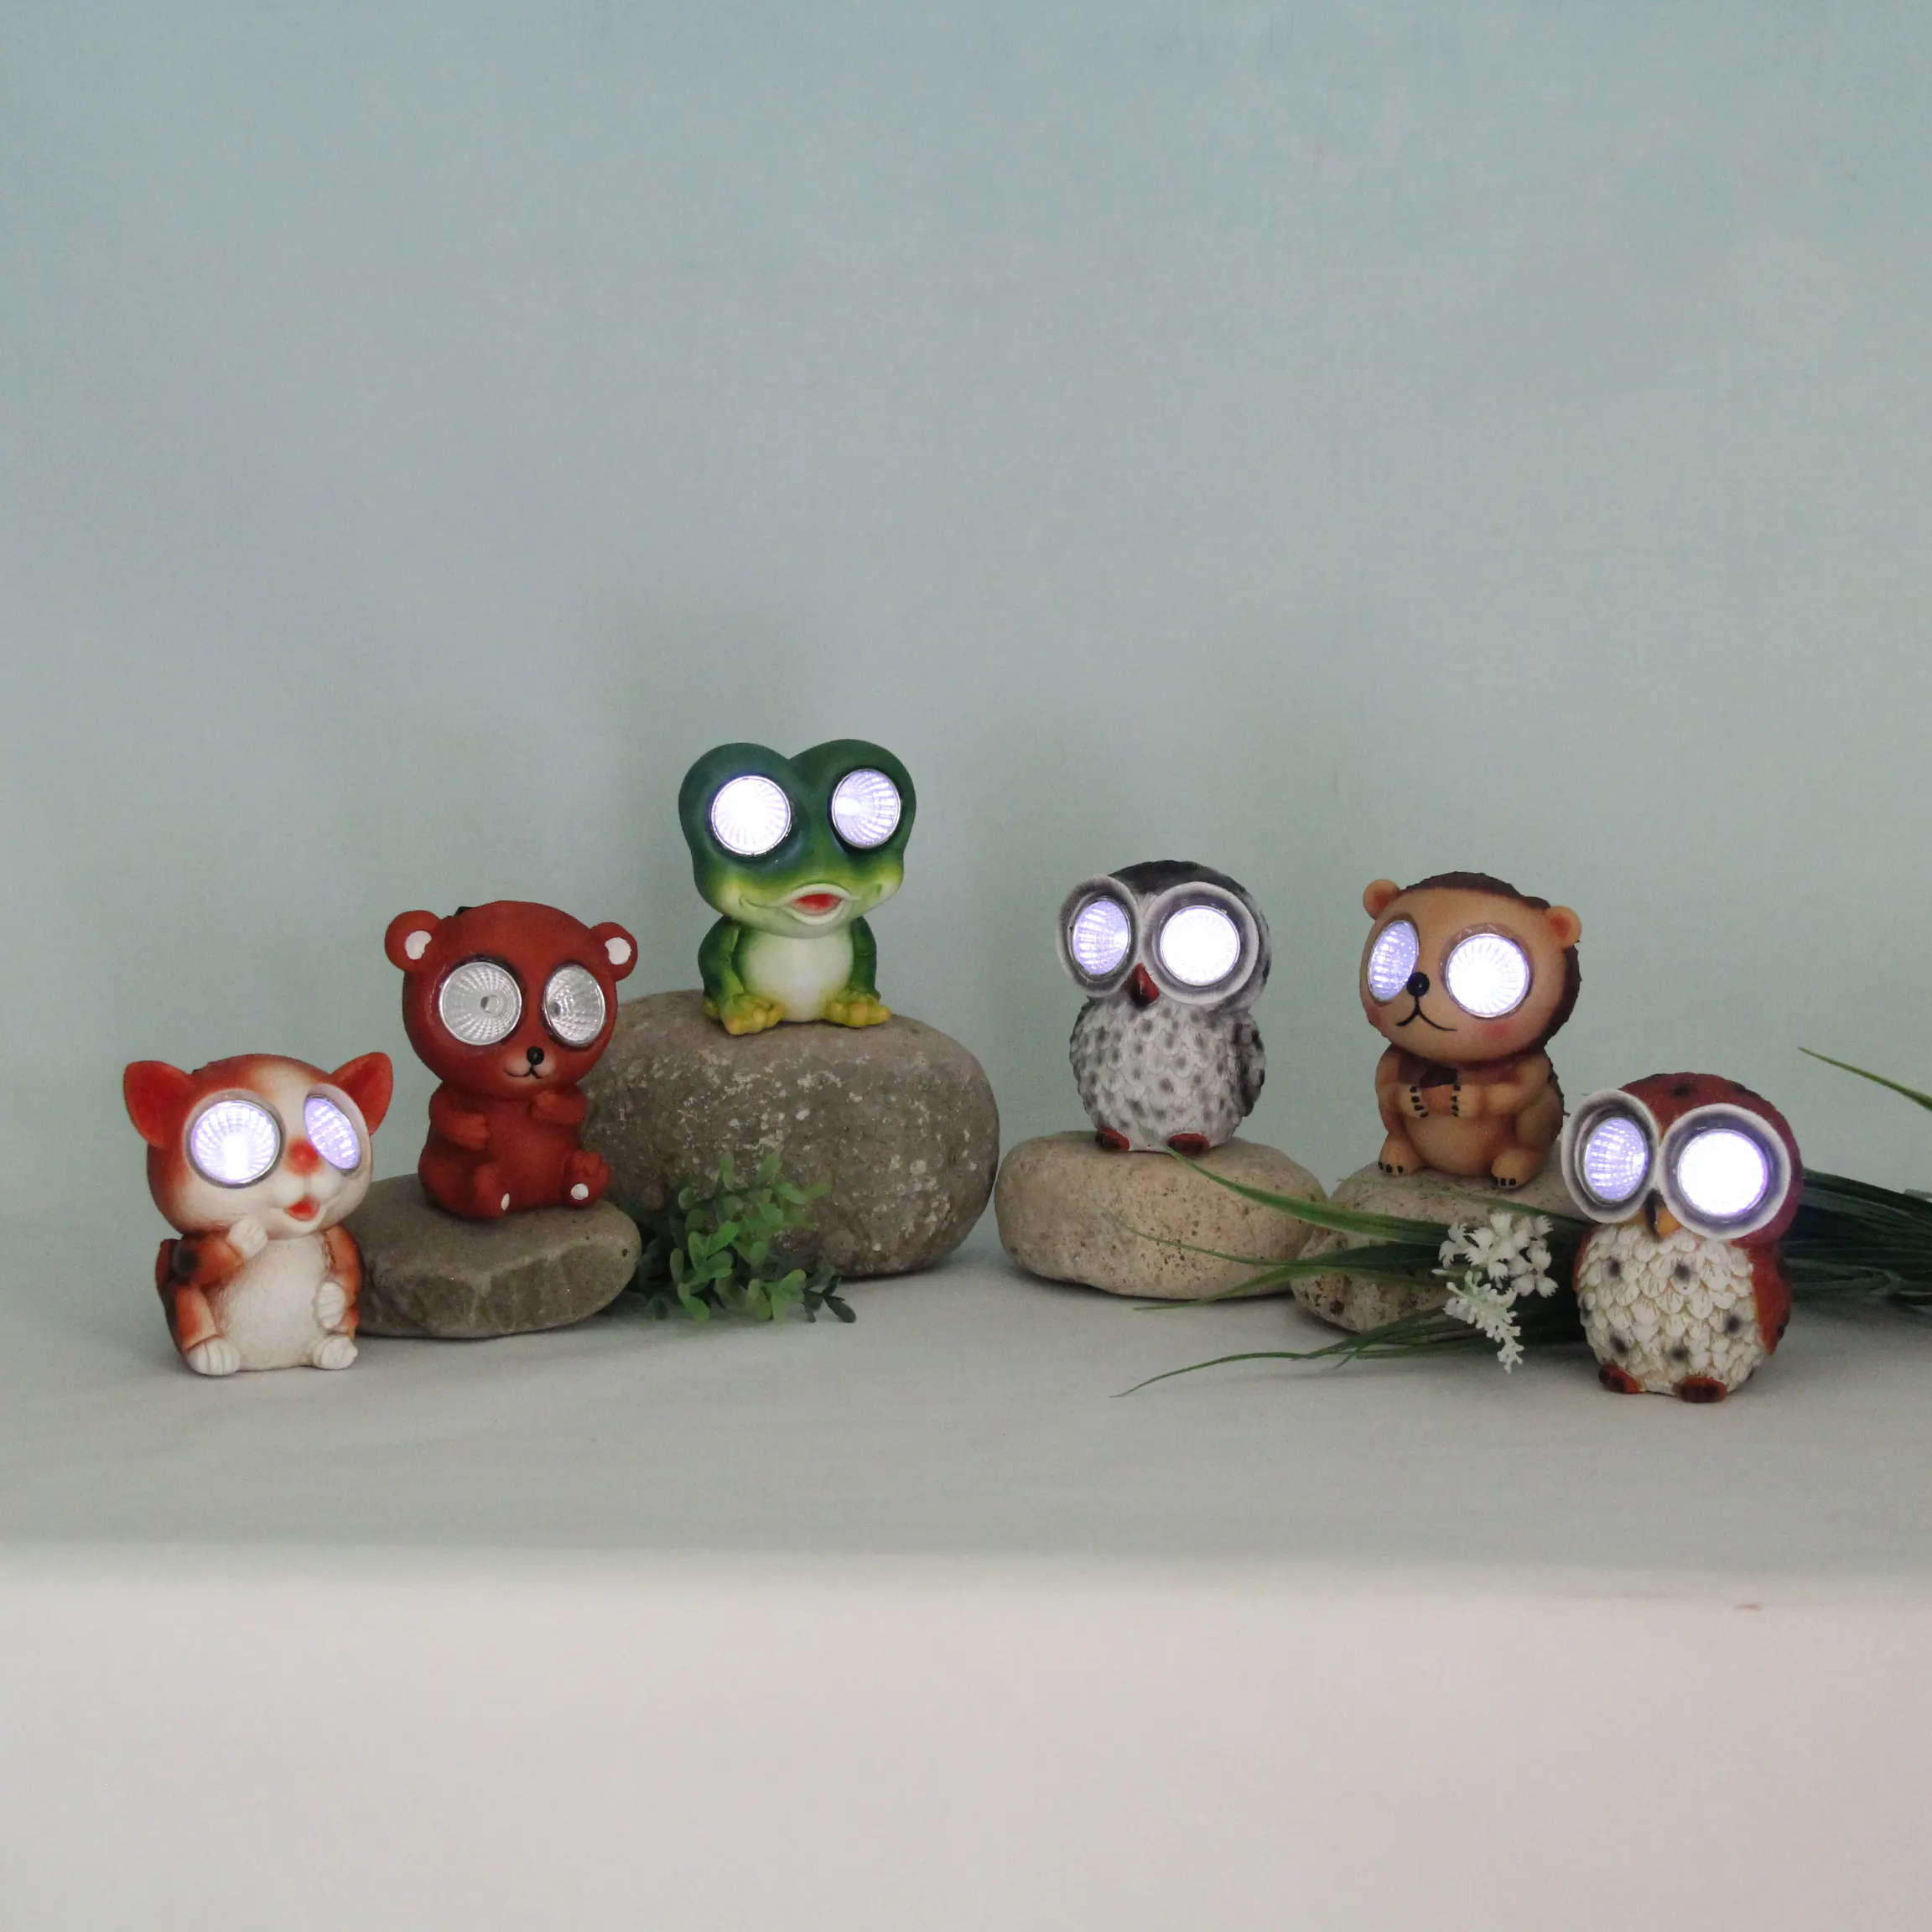 custom light figure frog led garden ornaments,outdoor sculpture hedgehog and cat polyresin crafts owl newest light